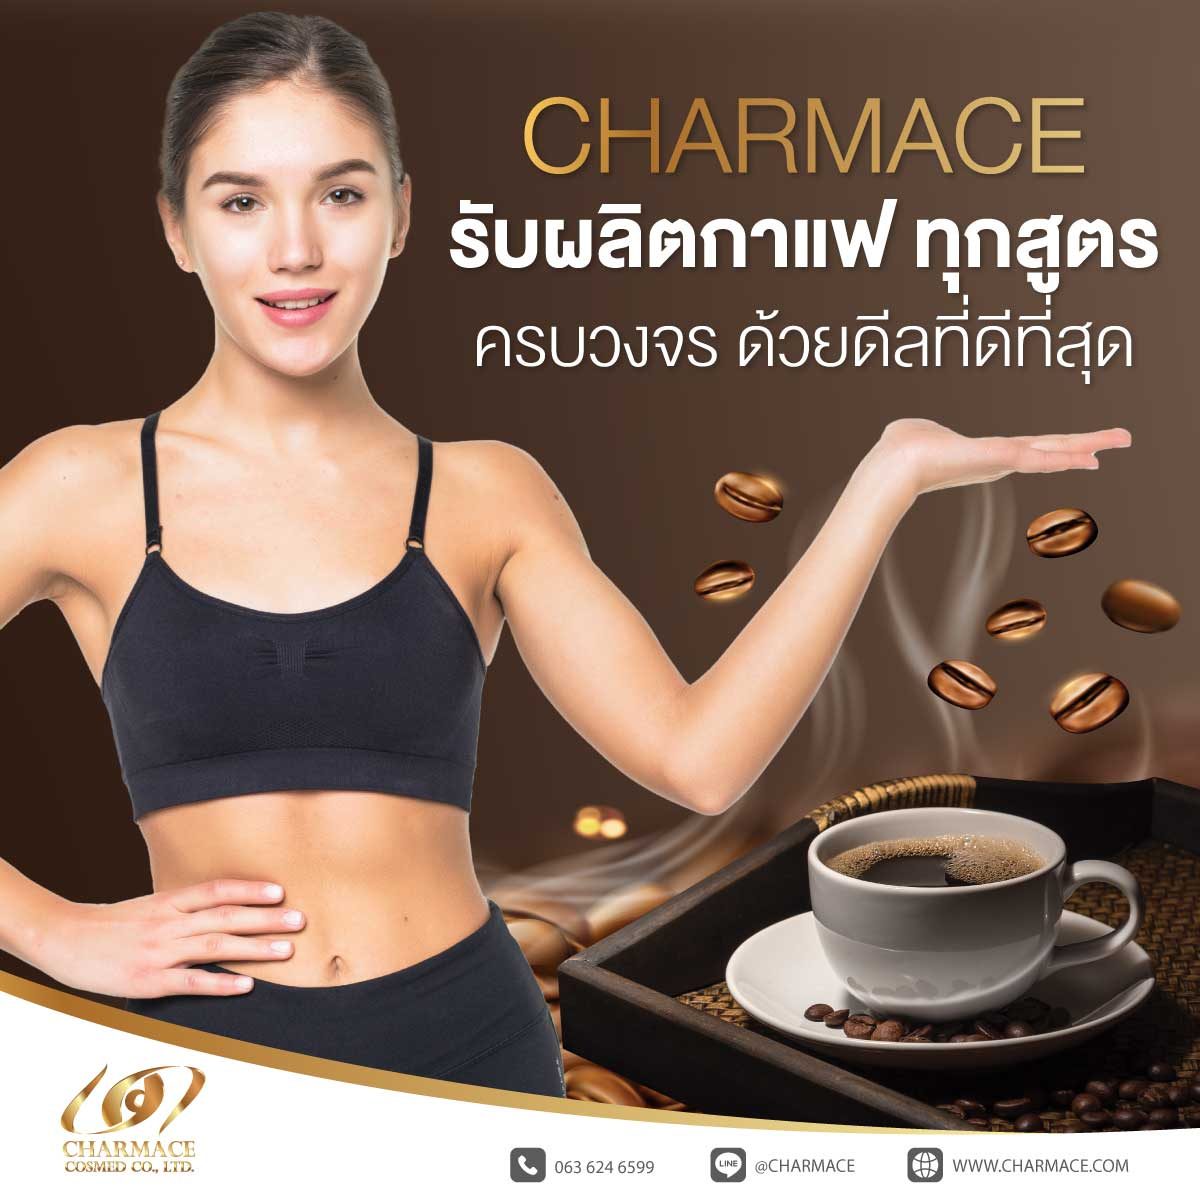 Charmace รับผลิตกาแฟ ทุกสูตร ครบวงจร ด้วยดีลที่ดีที่สุด